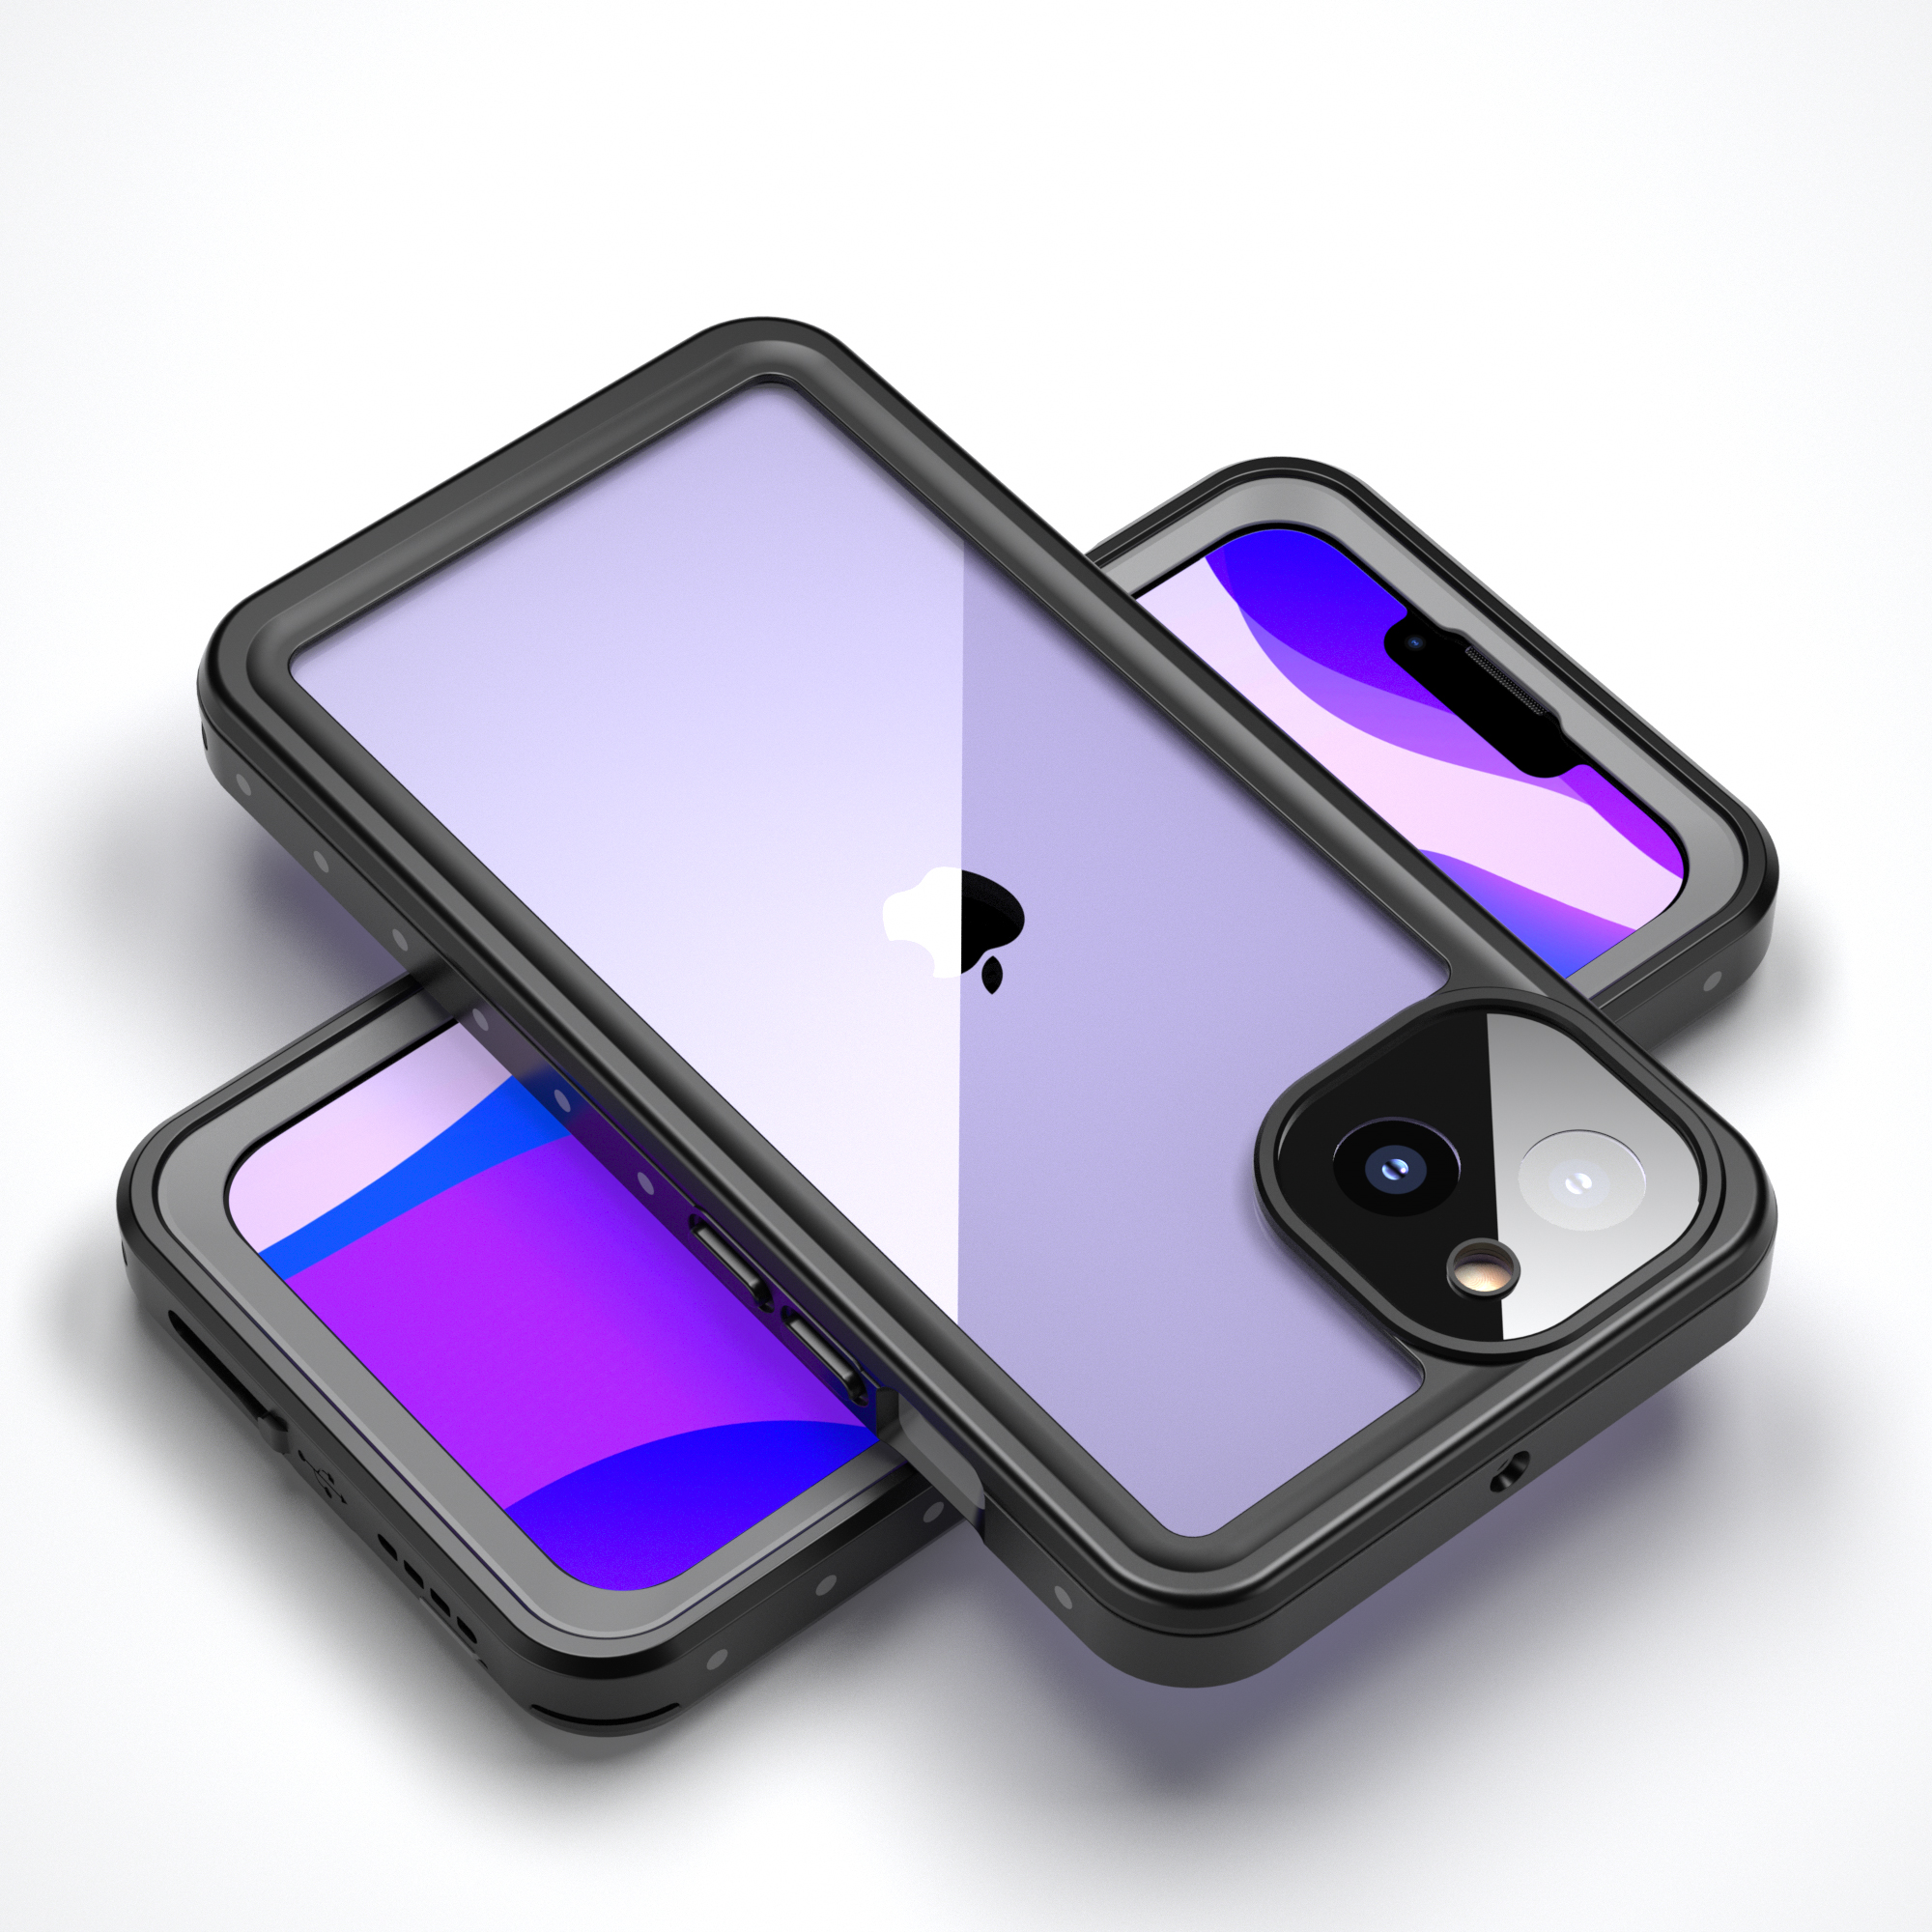 Waterproof drop-proof dust-proof mobile pet tpu pc iphone case